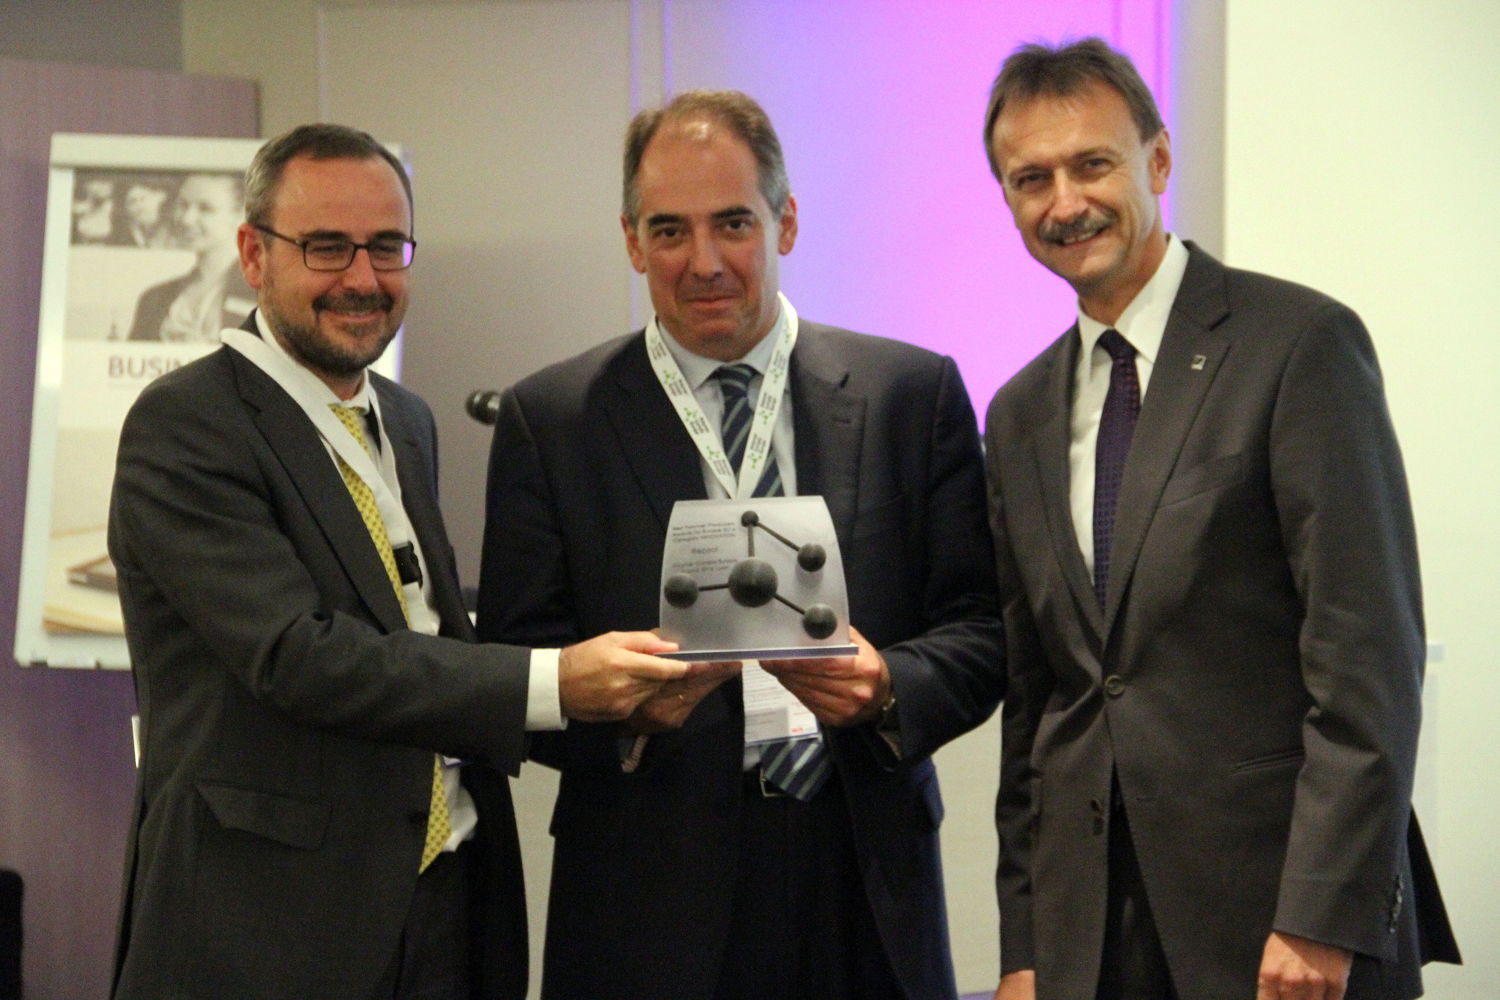 Winner in category Innovation: Repsol represented by Rafael Jiménez & Esteban Gimeno. Award handed by Michael Kundel, EuPC President.